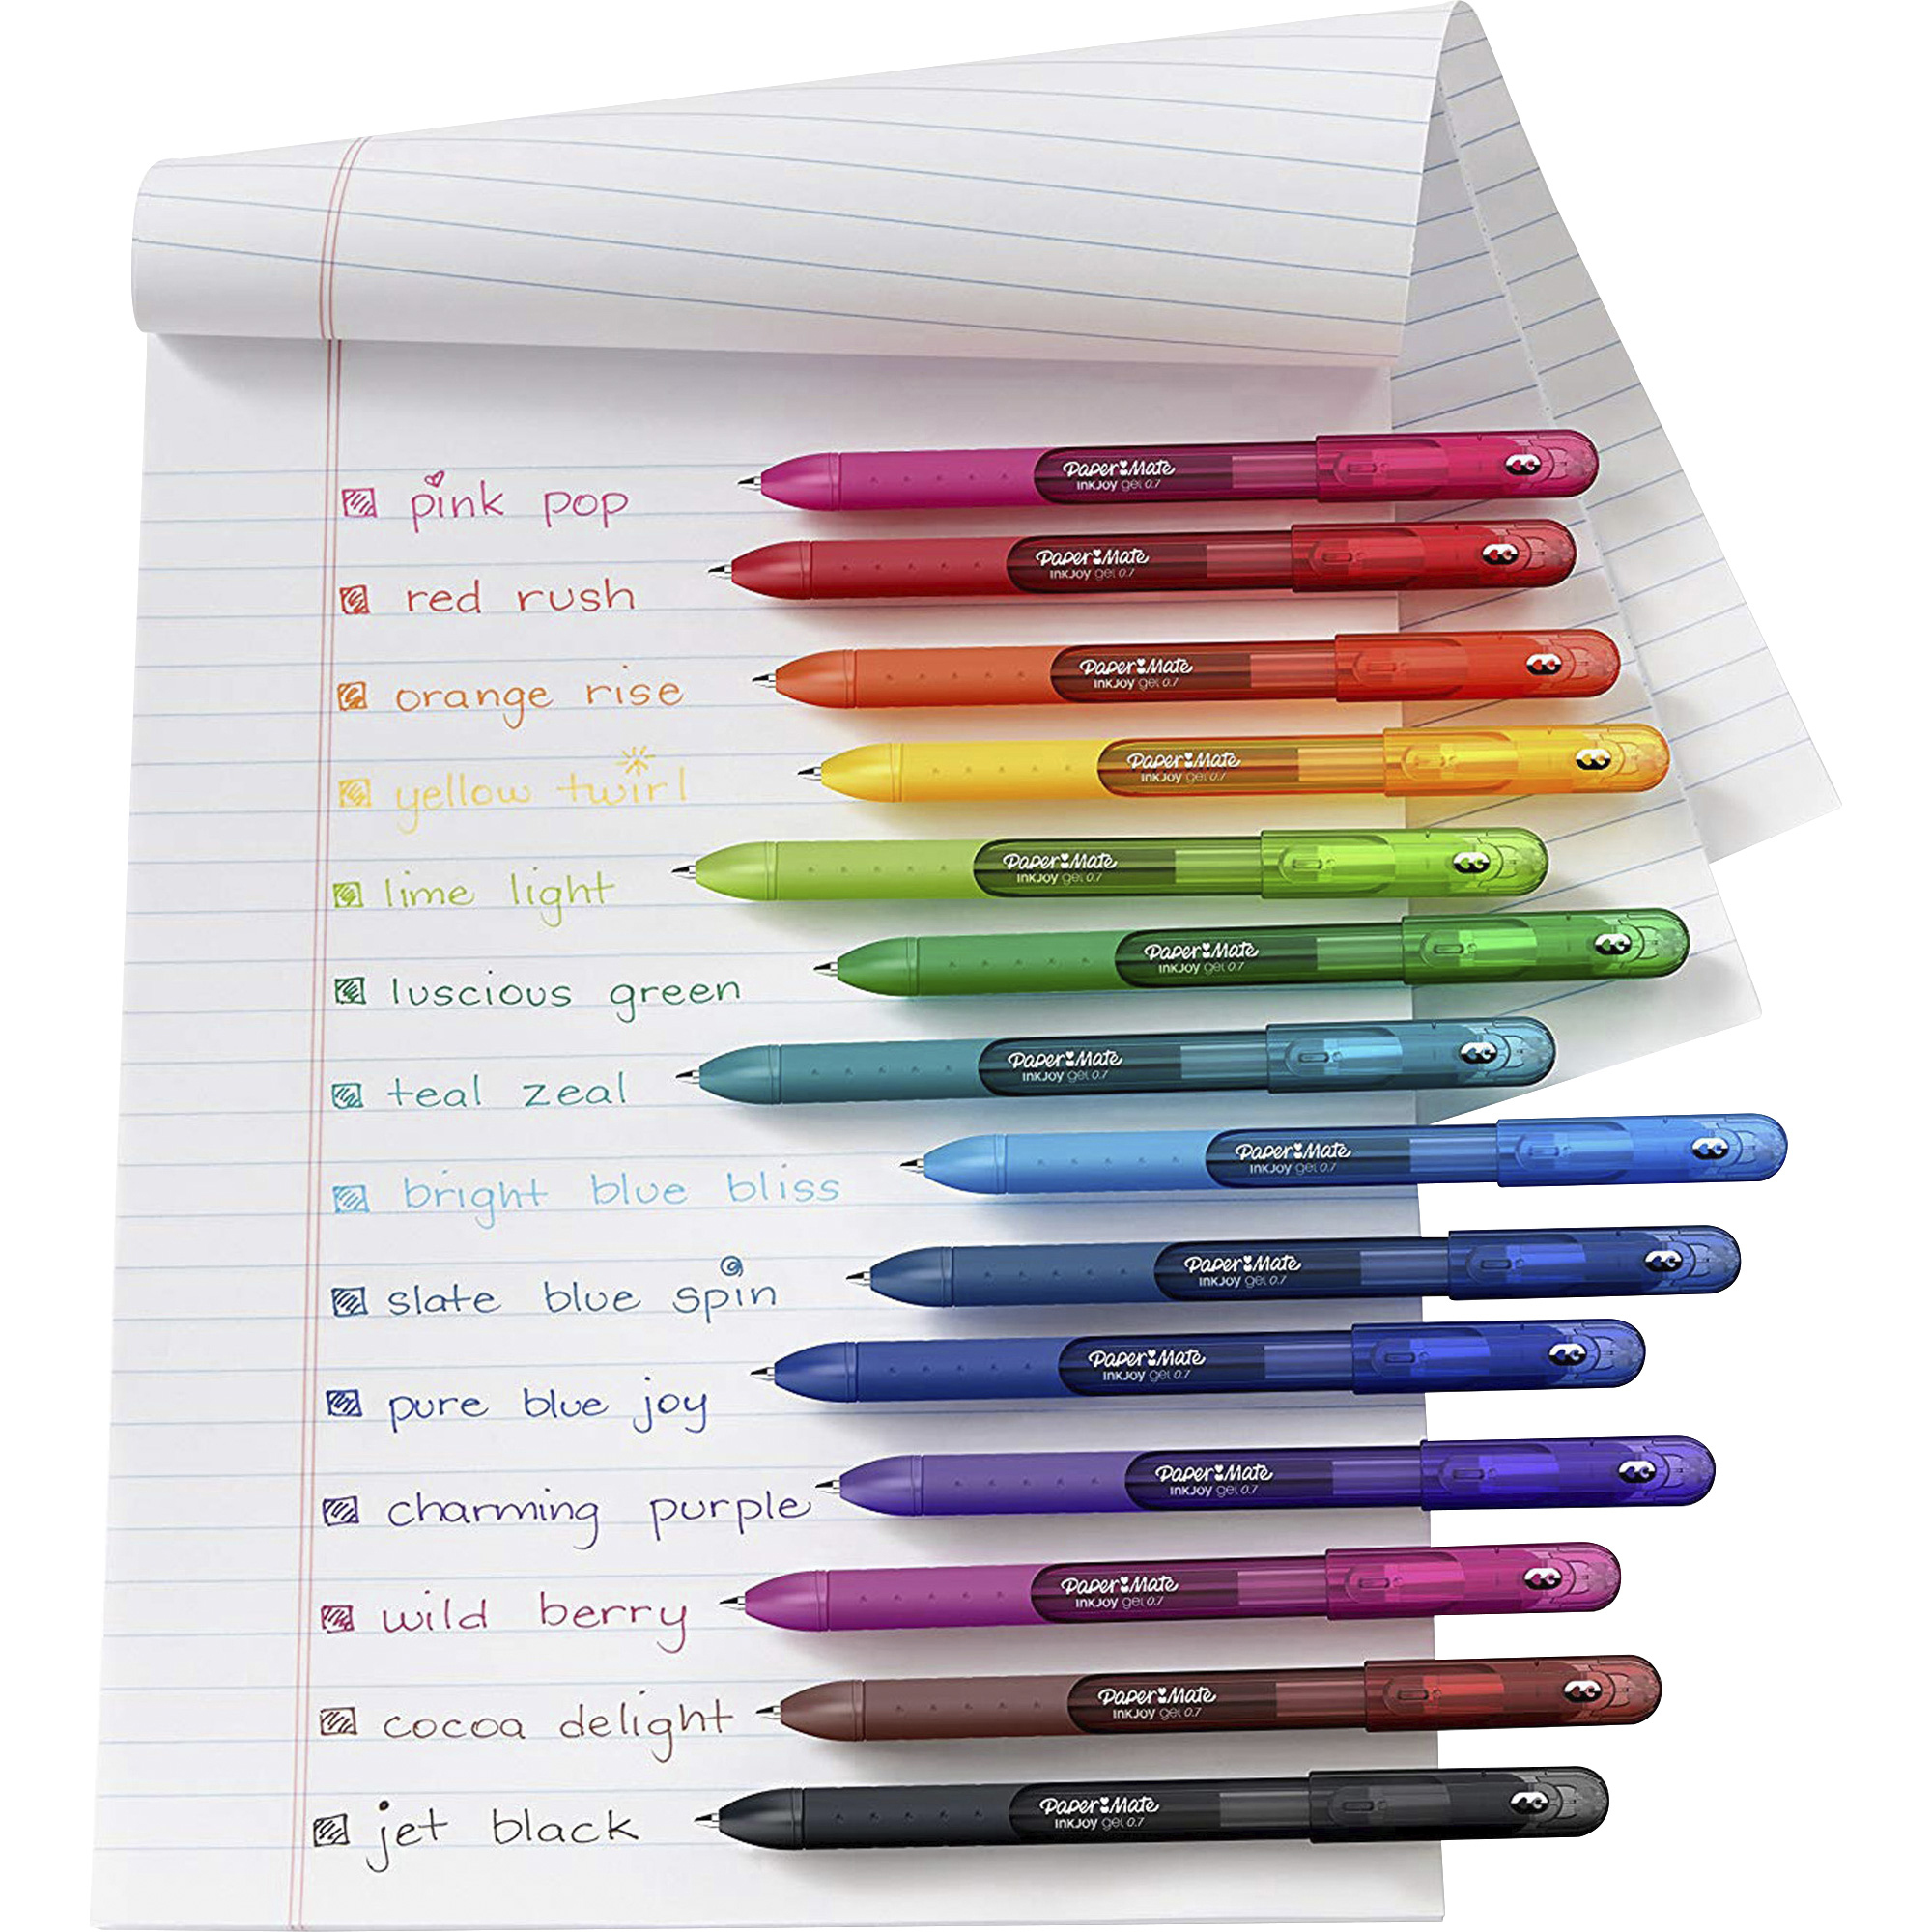 Paper Mate InkJoy Gel Pens, Medium Point, Blue, 10-Count